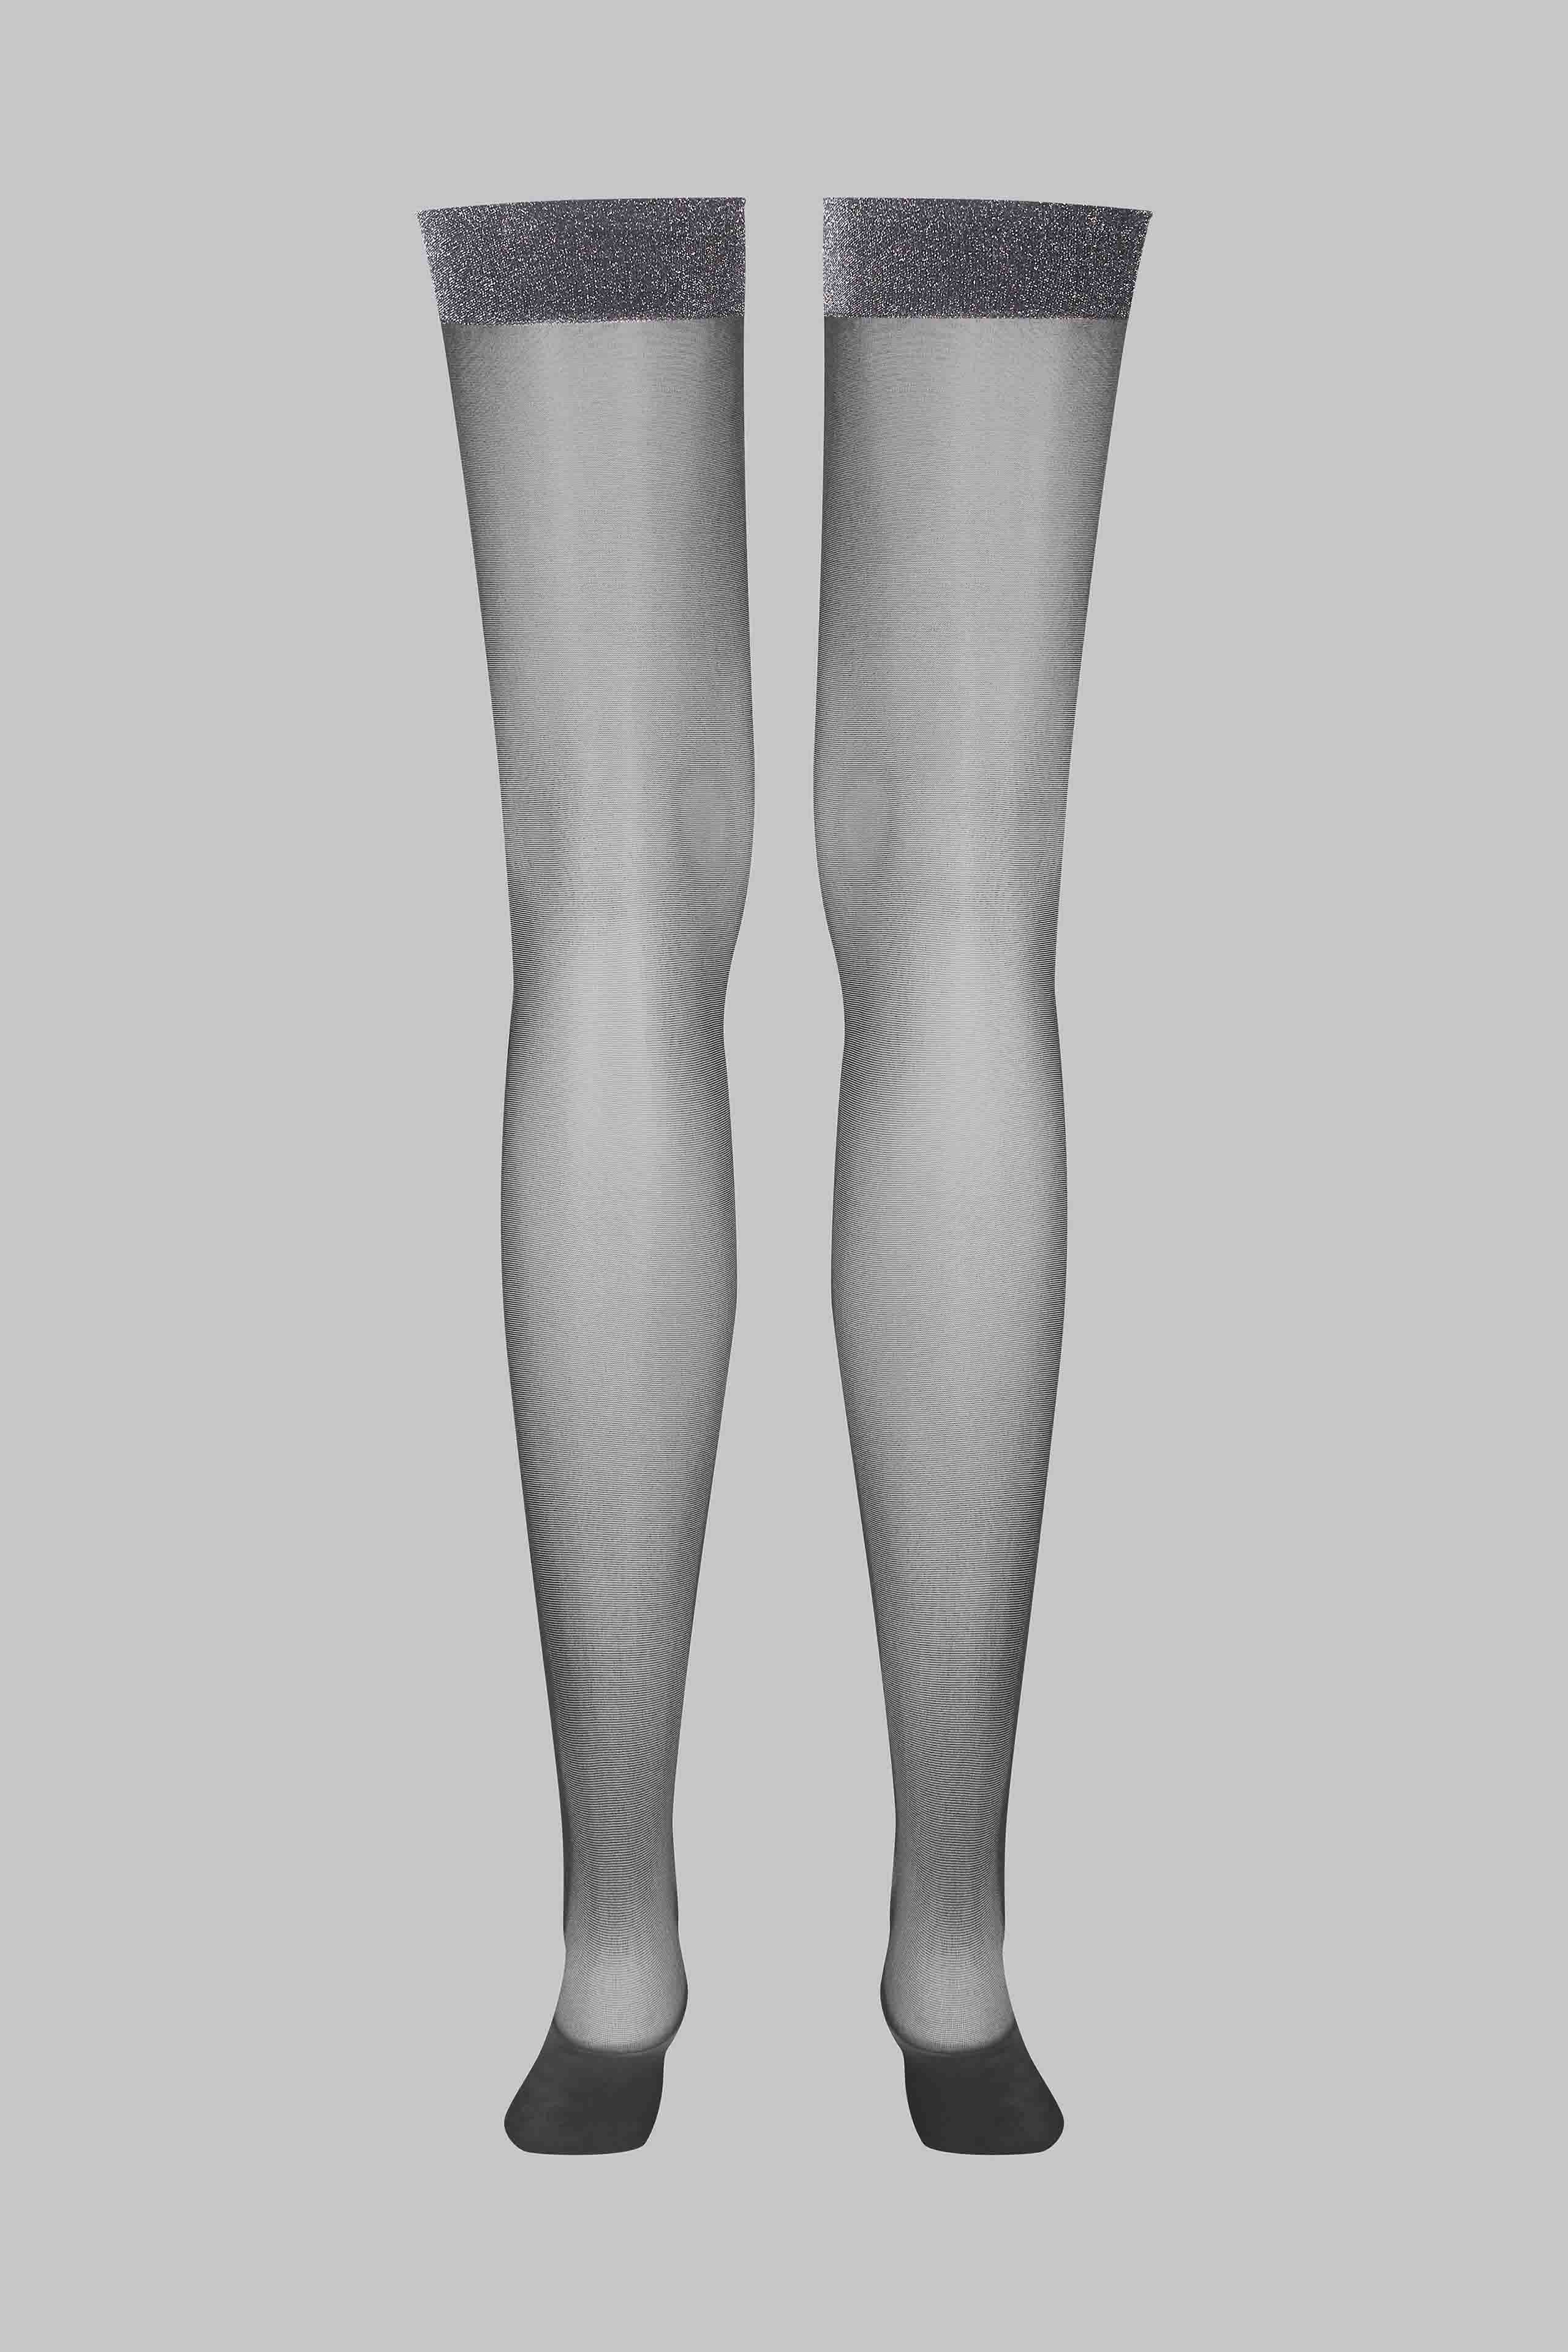 Lurex garter stockings - 20D